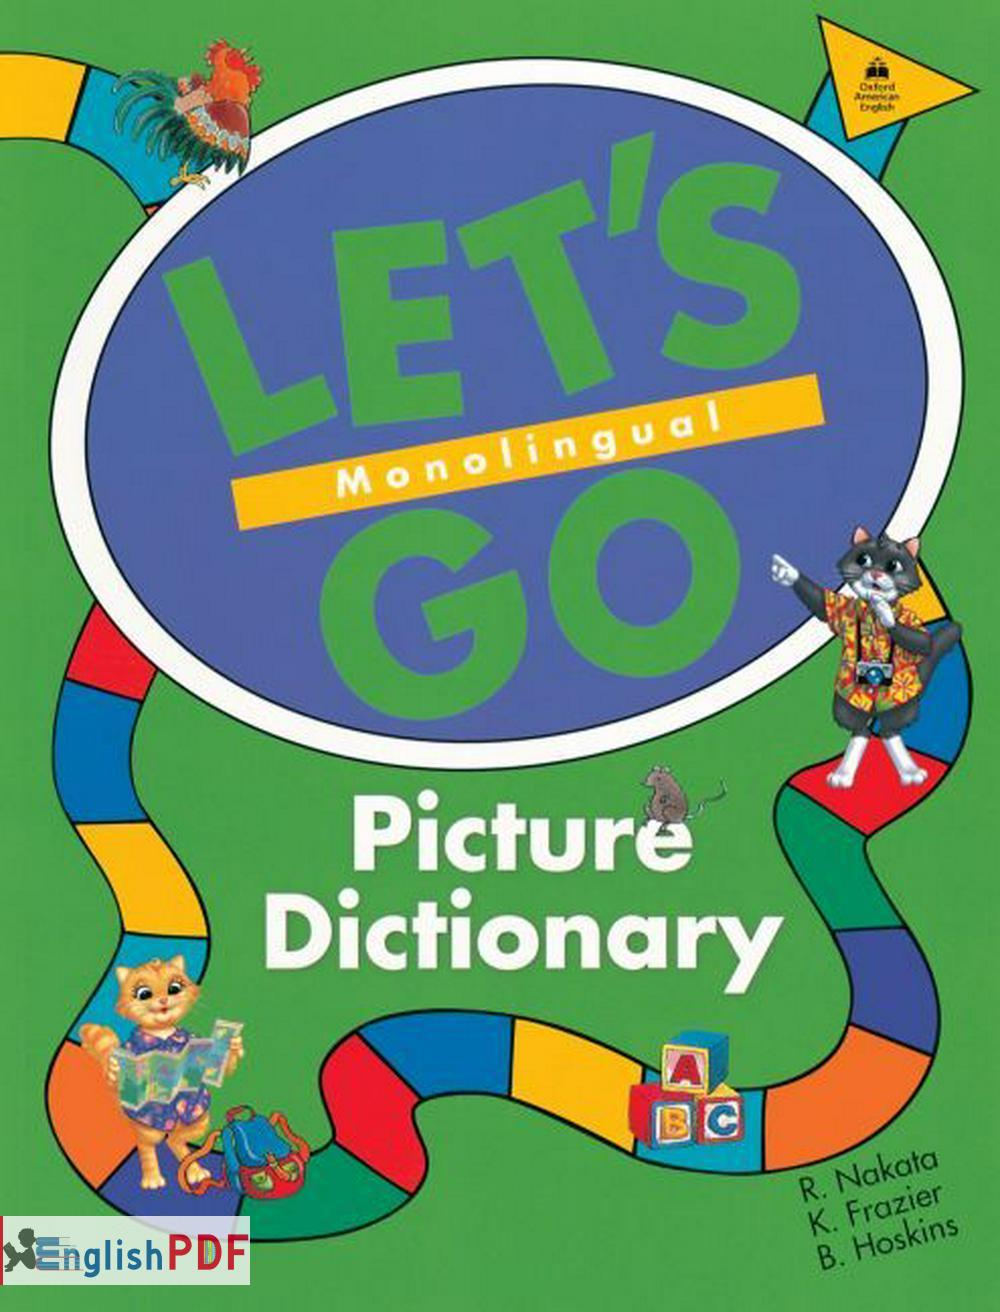 Let’s Go Picture Dictionary PDF Monolingual Ritsuko Nakata EnglishPDF